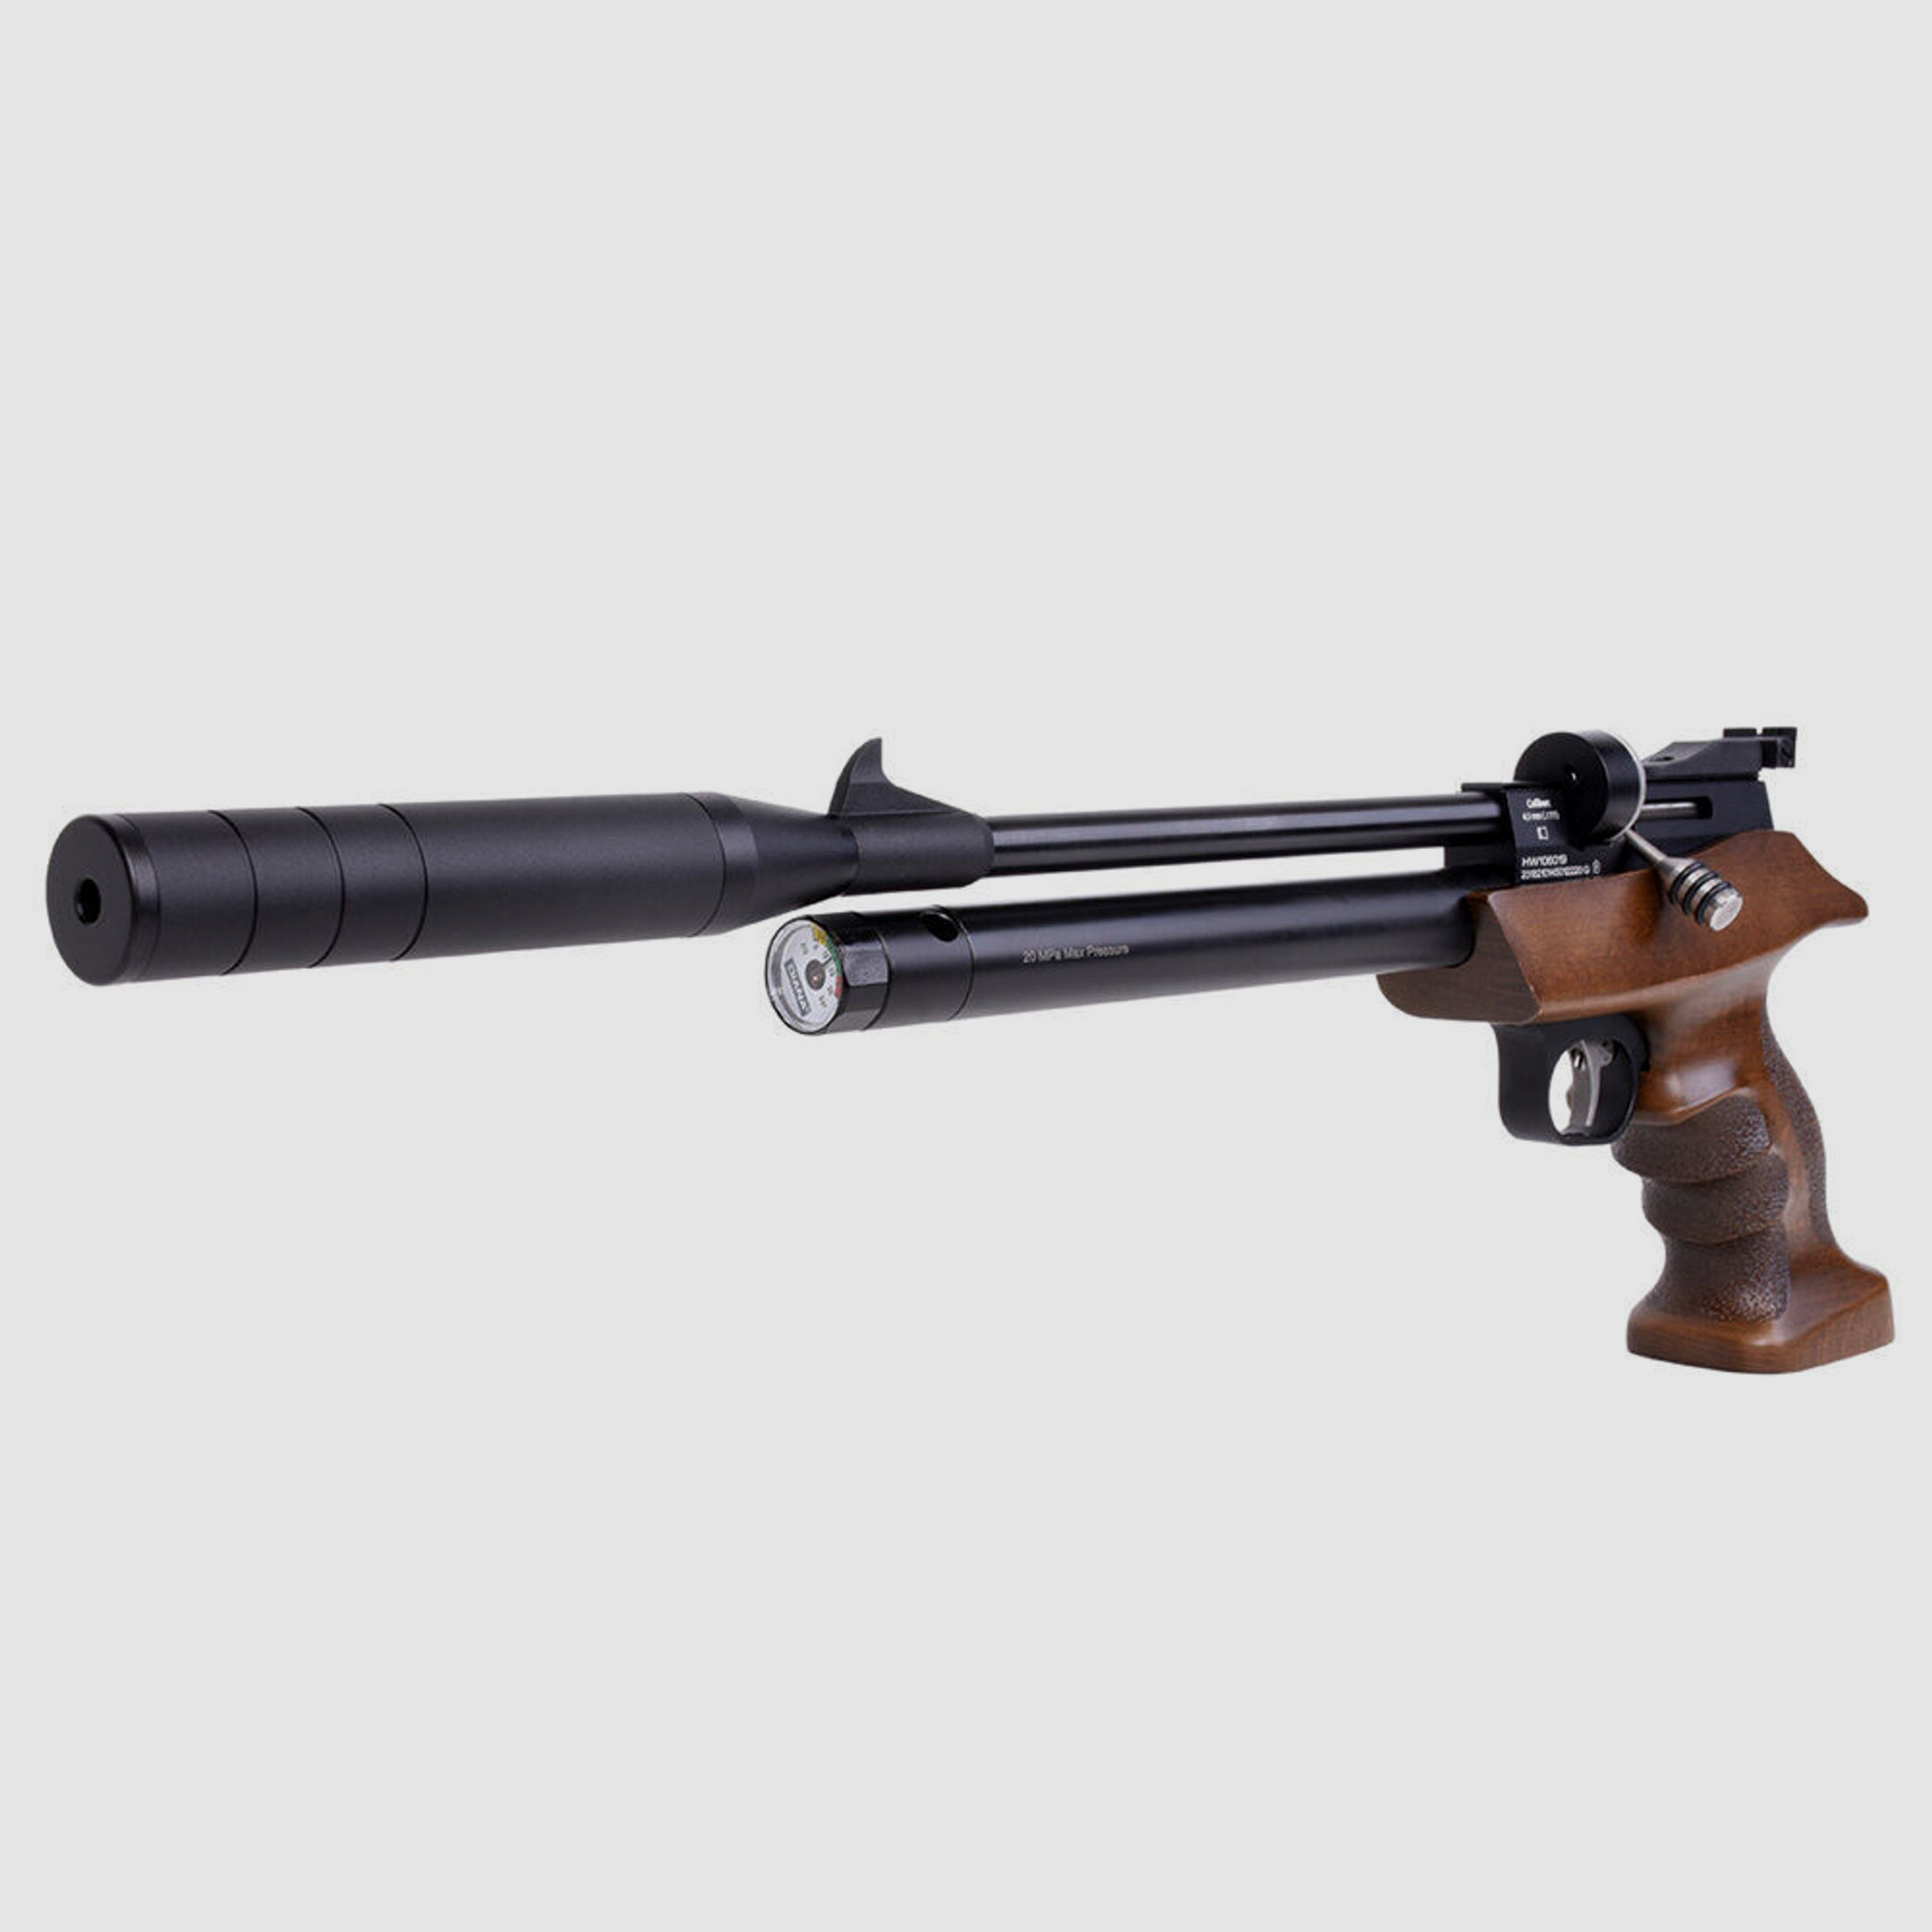 Diana Bandit Gen 2 Pressluft Matchpistole 4,5 mm - integrierter Regulator